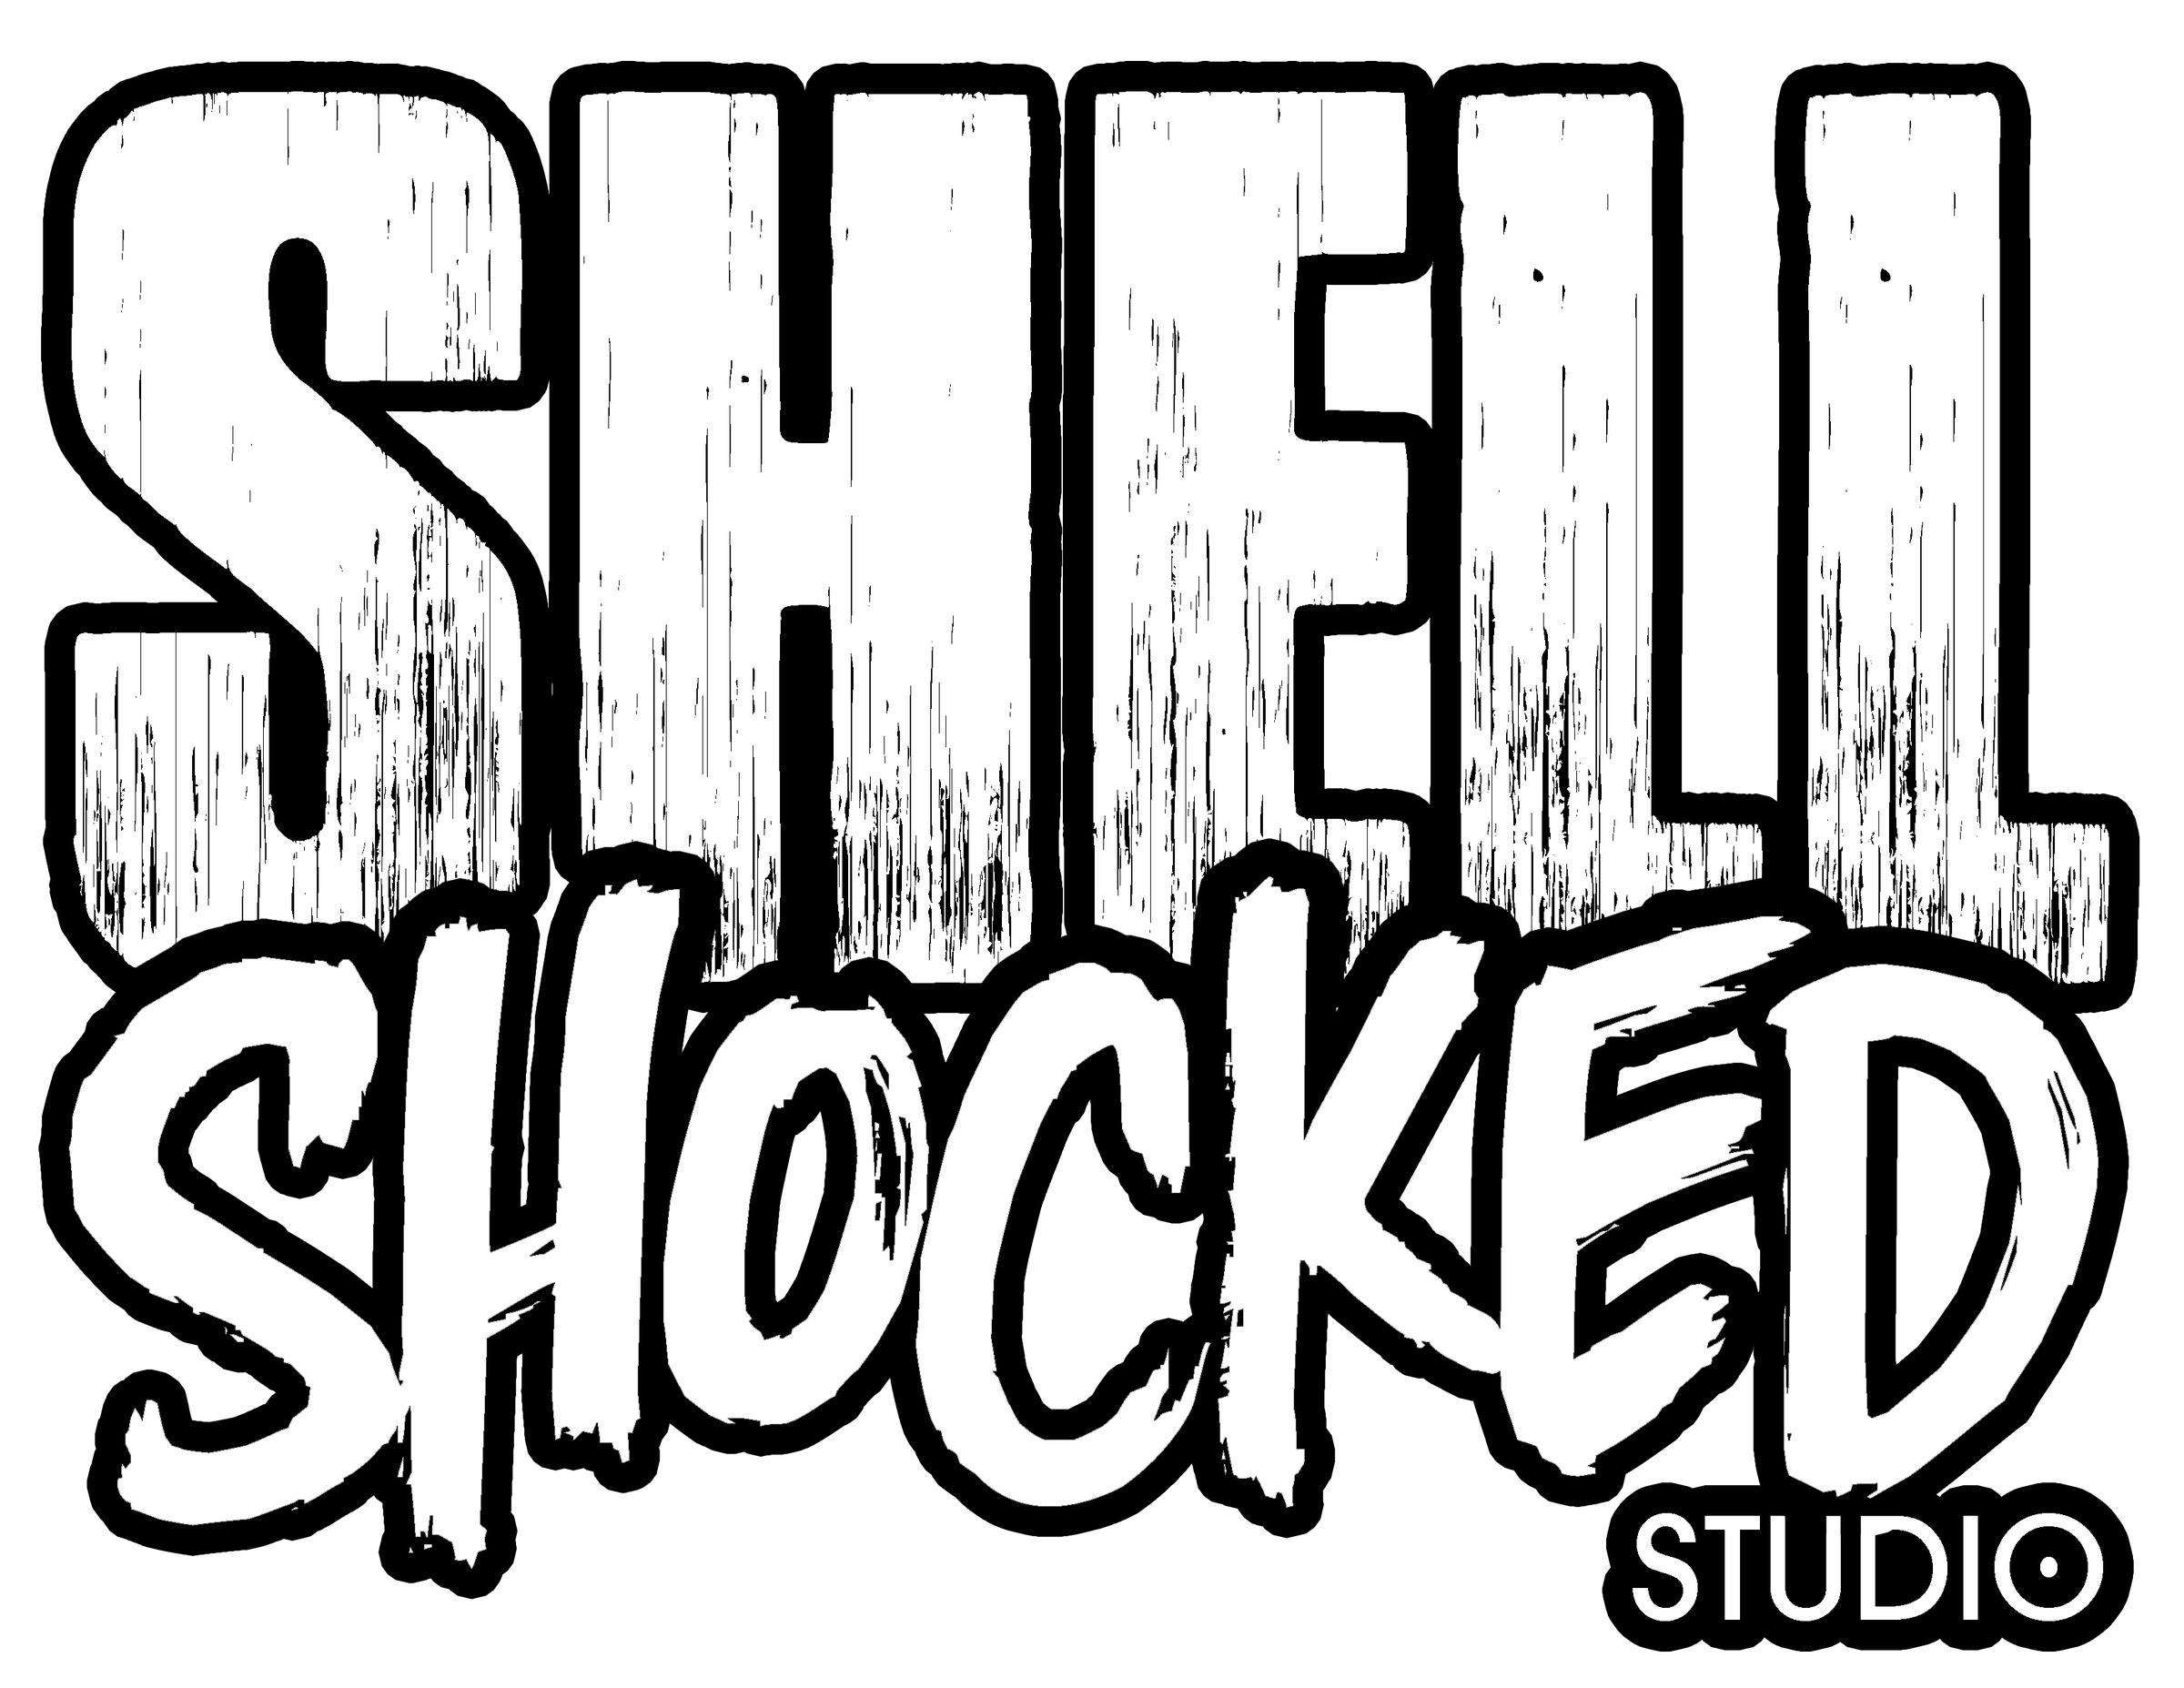 Shell Shocked Studio the art of Adrian Nicita